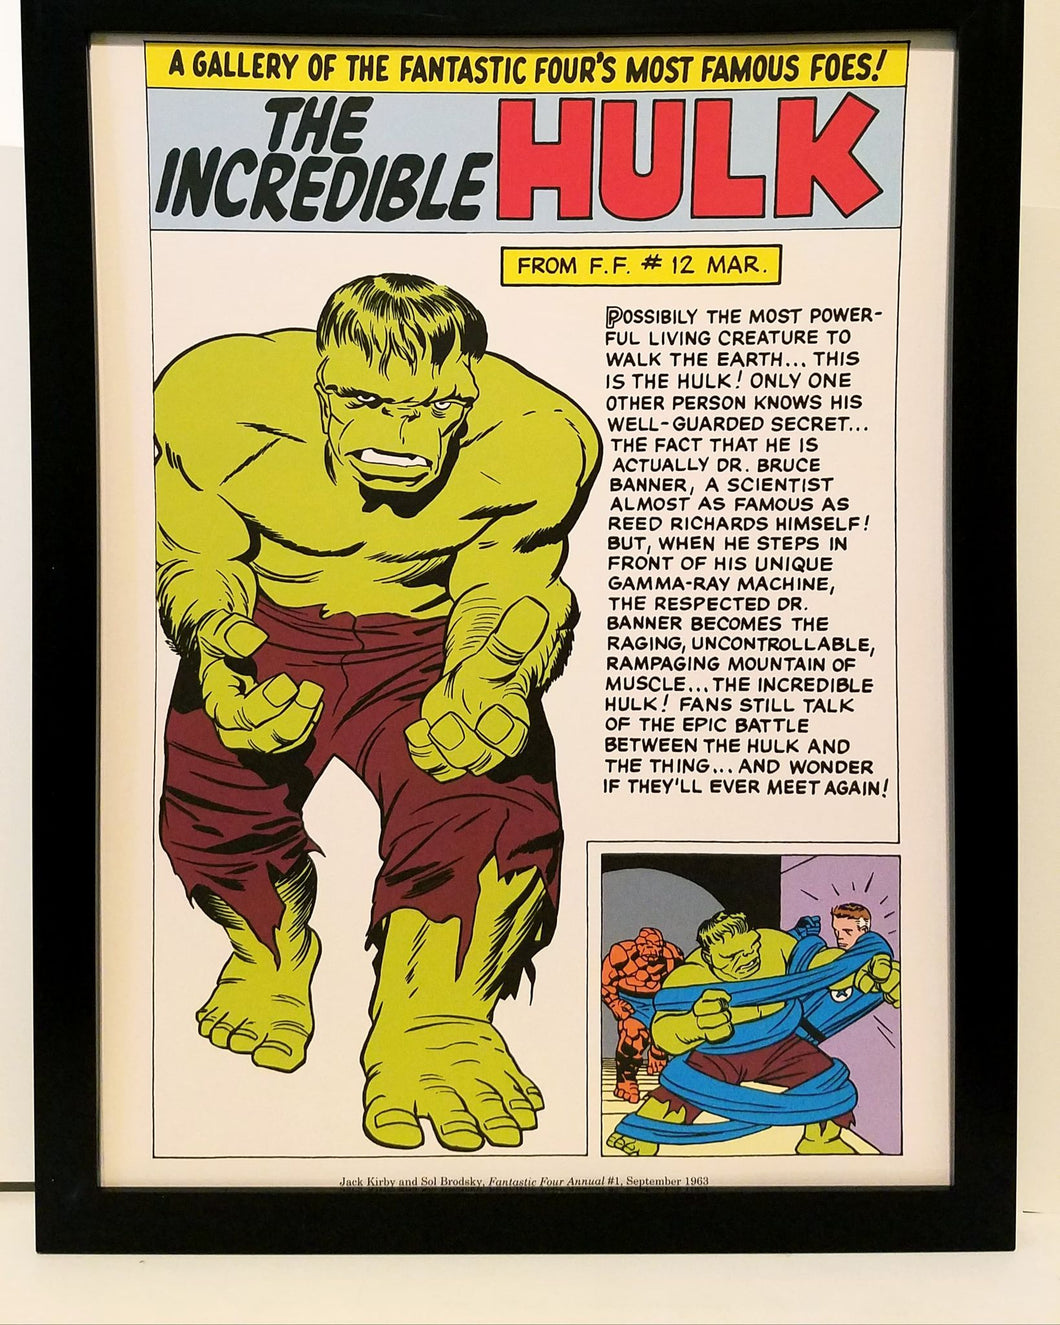 Incredible Hulk by Jack Kirby 9x12 FRAMED Marvel Comics Vintage Art Print Poster